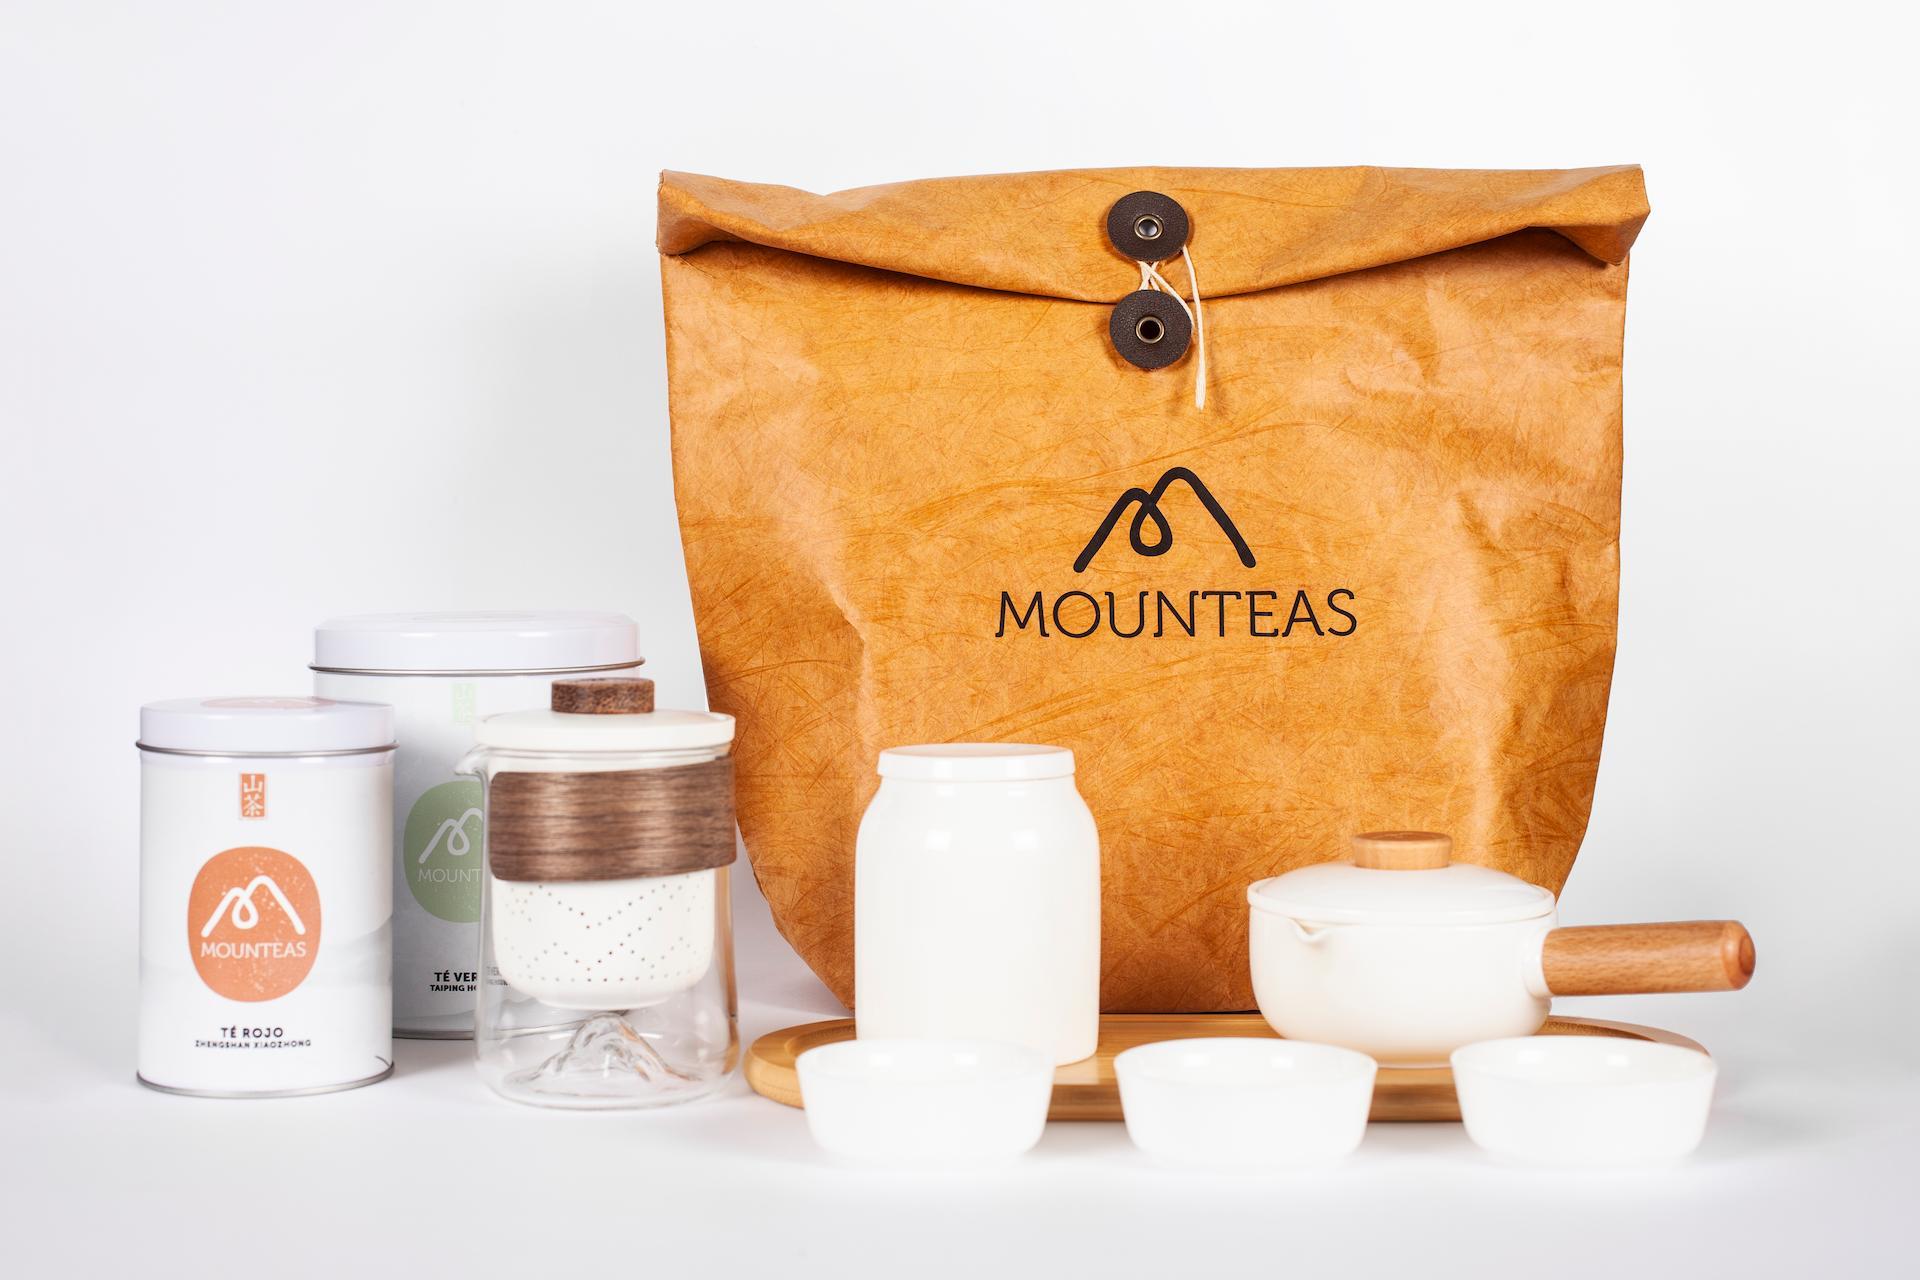 Mounteas, la marca de t creada por San Wei.